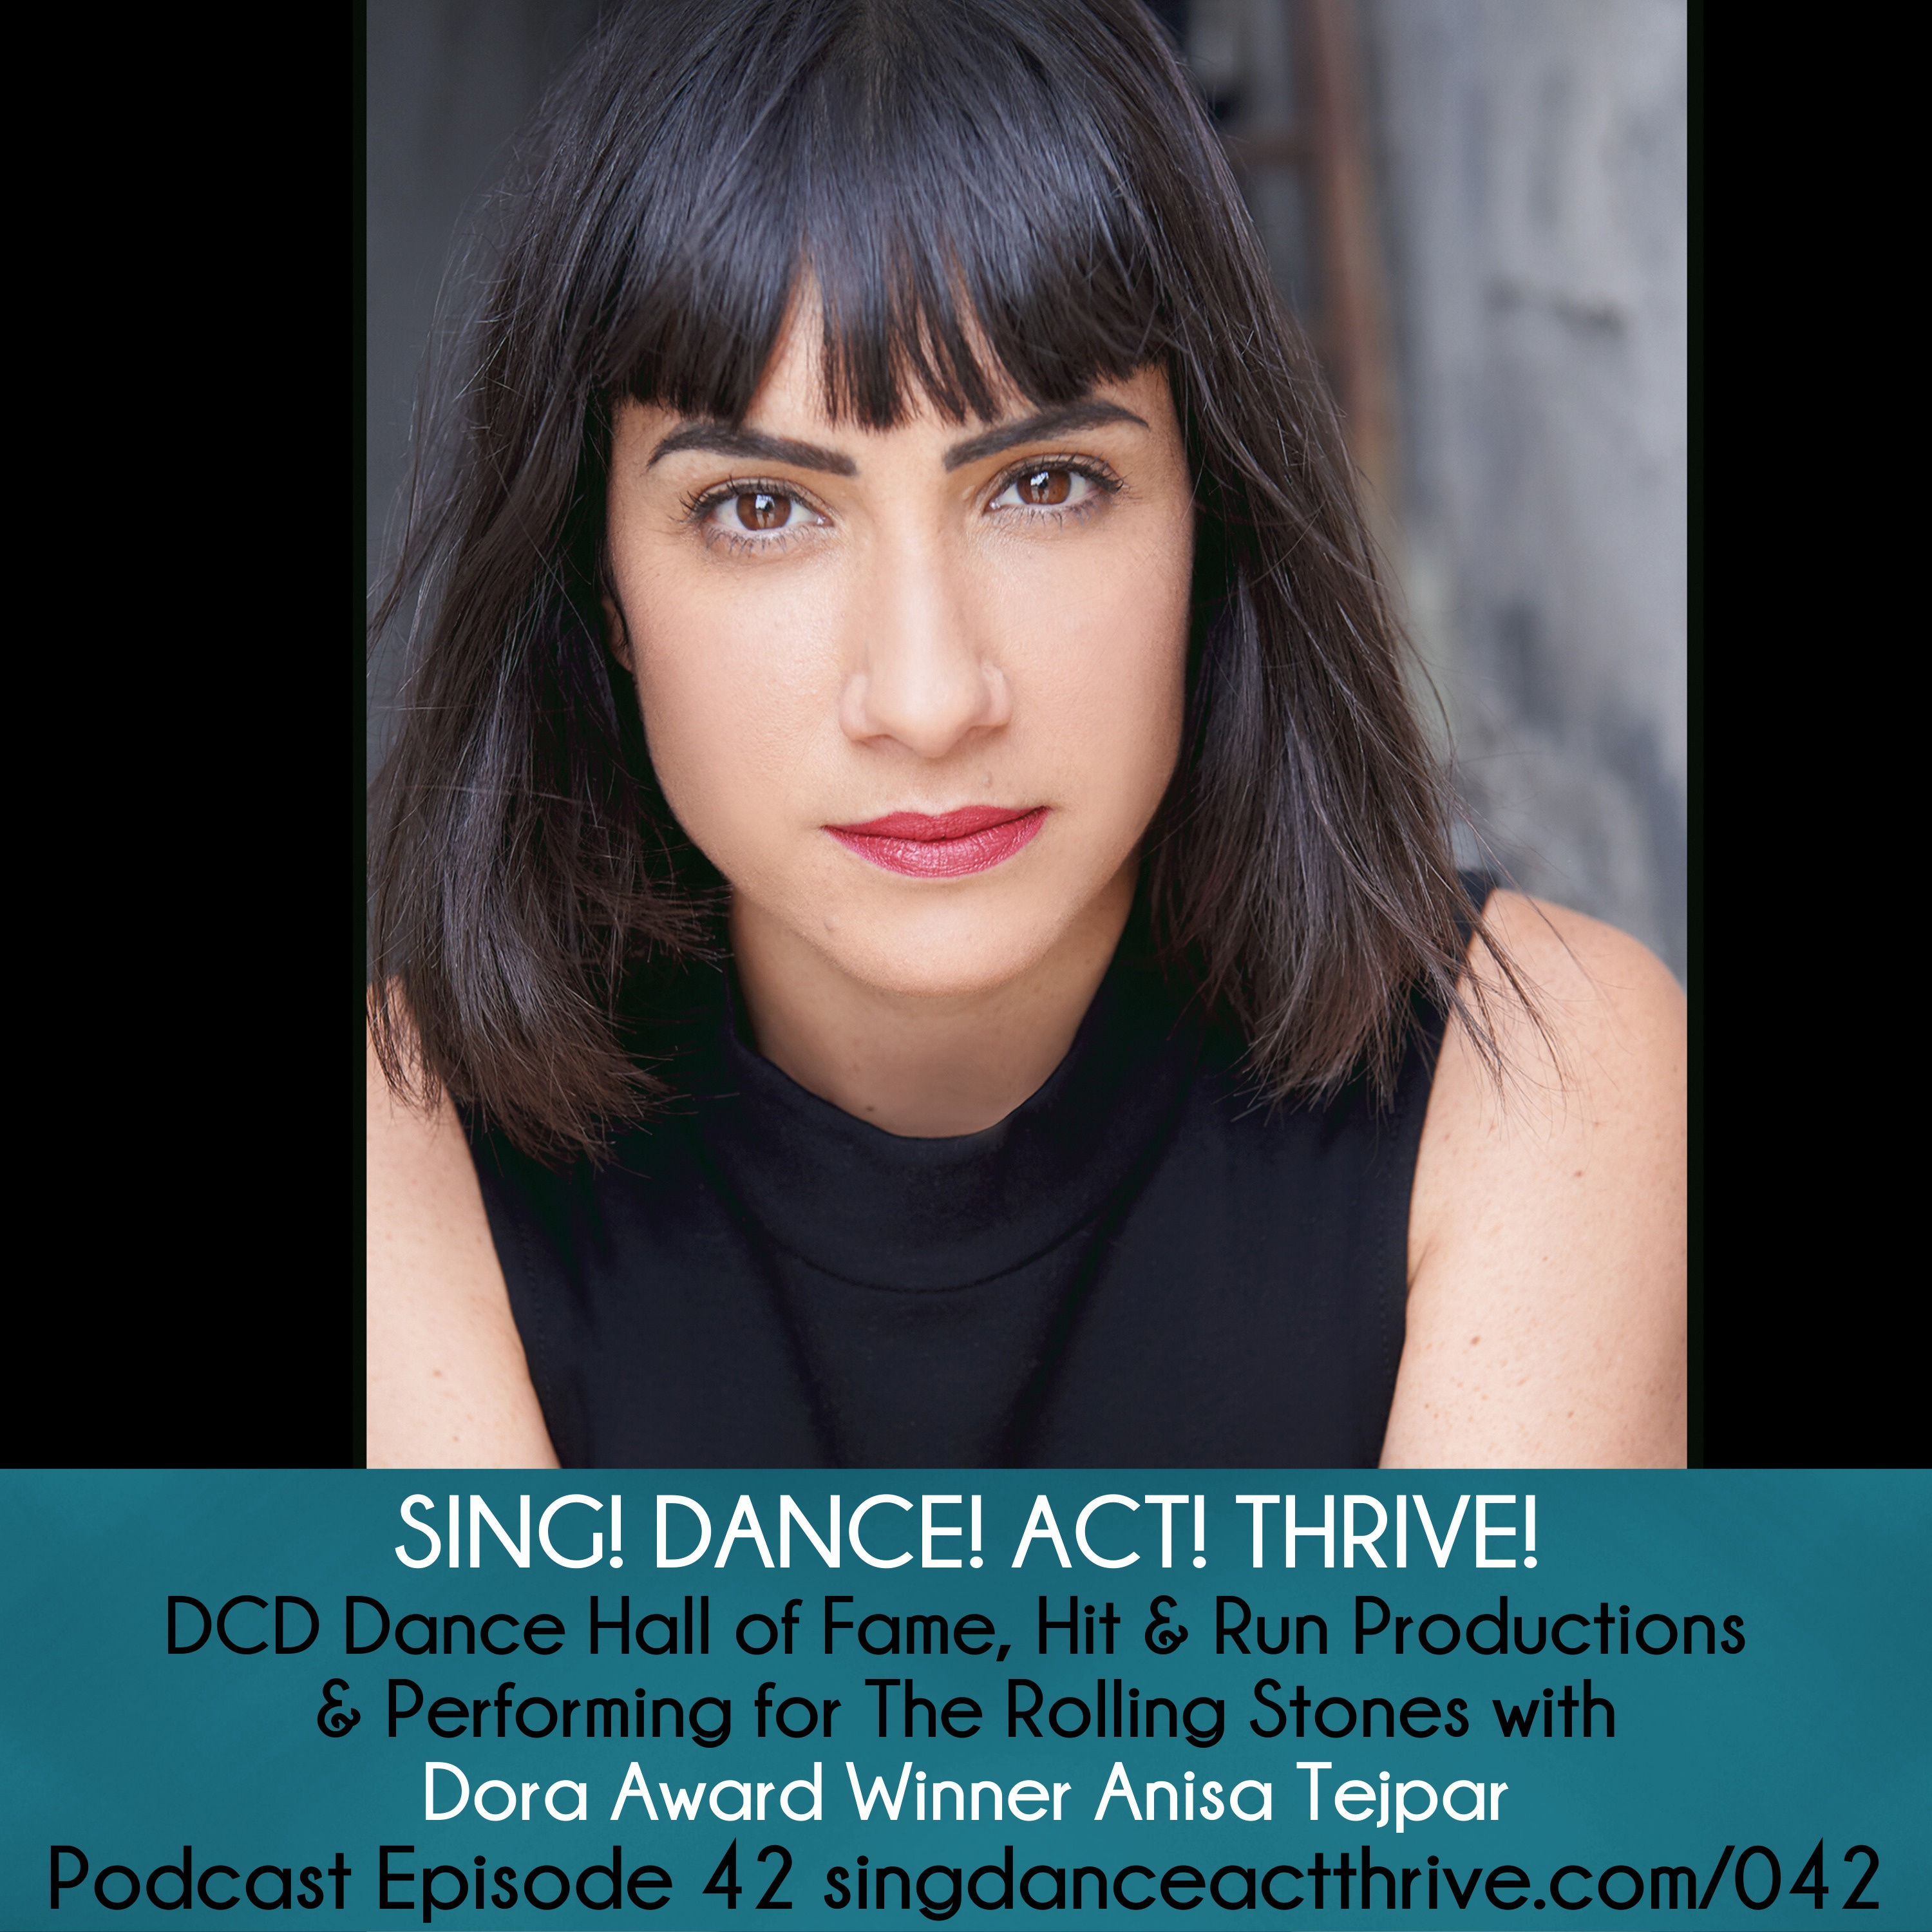 Dora Award Winner Anisa Tejpar on DCD Dance Hall of Fame, Hit & Run Productions & the Rolling Stones